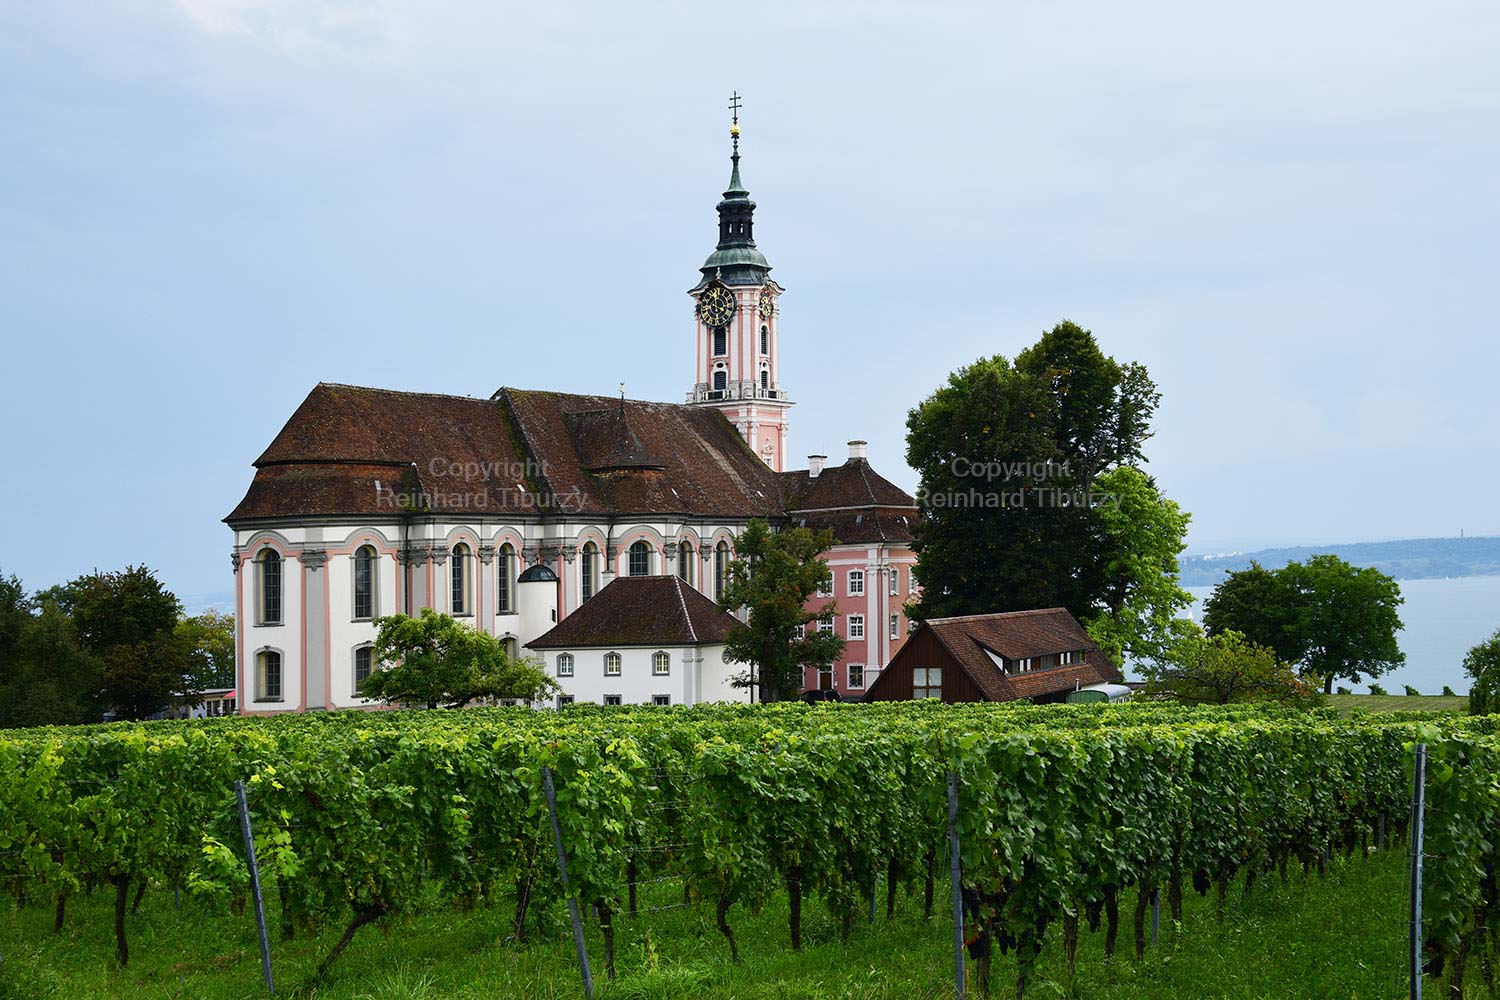 Monastery church, Birnau, Germany